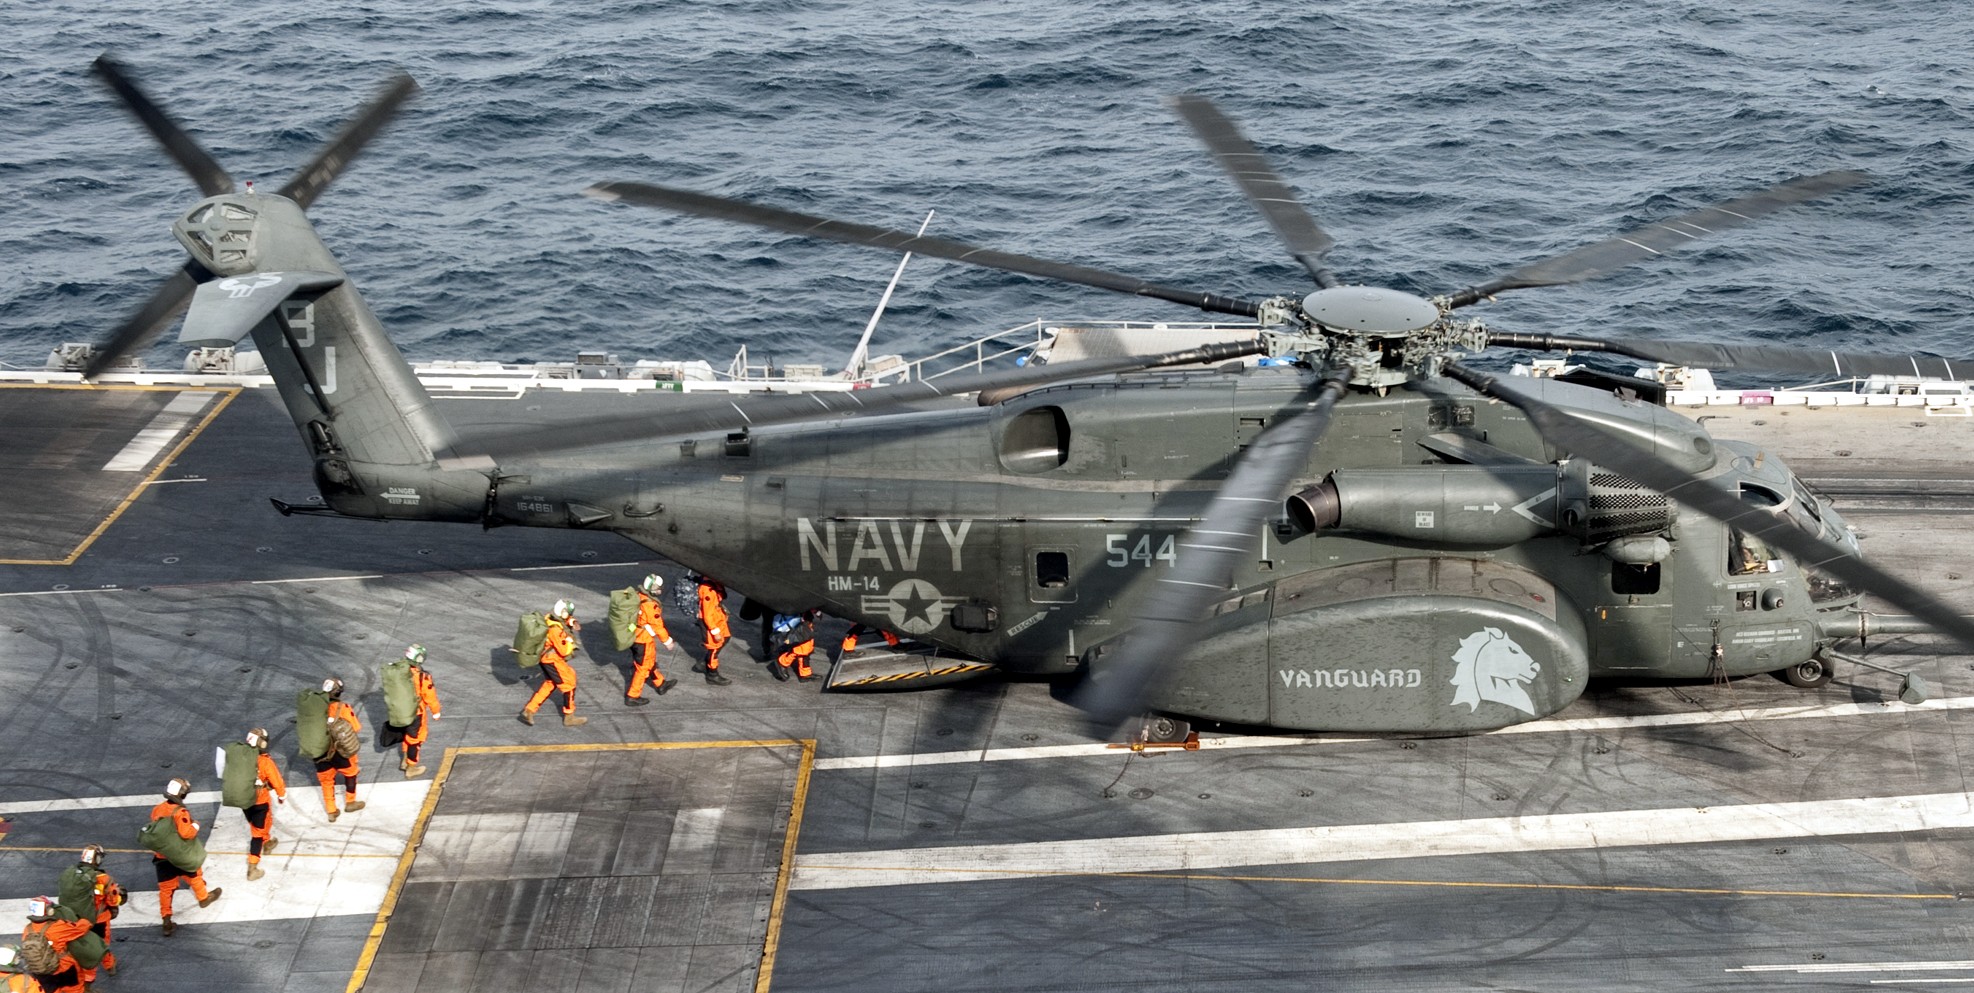 hm-14 vanguard helicopter mine countermeasures squadron navy mh-53e sea dragon 117 uss enterprise cvn-65